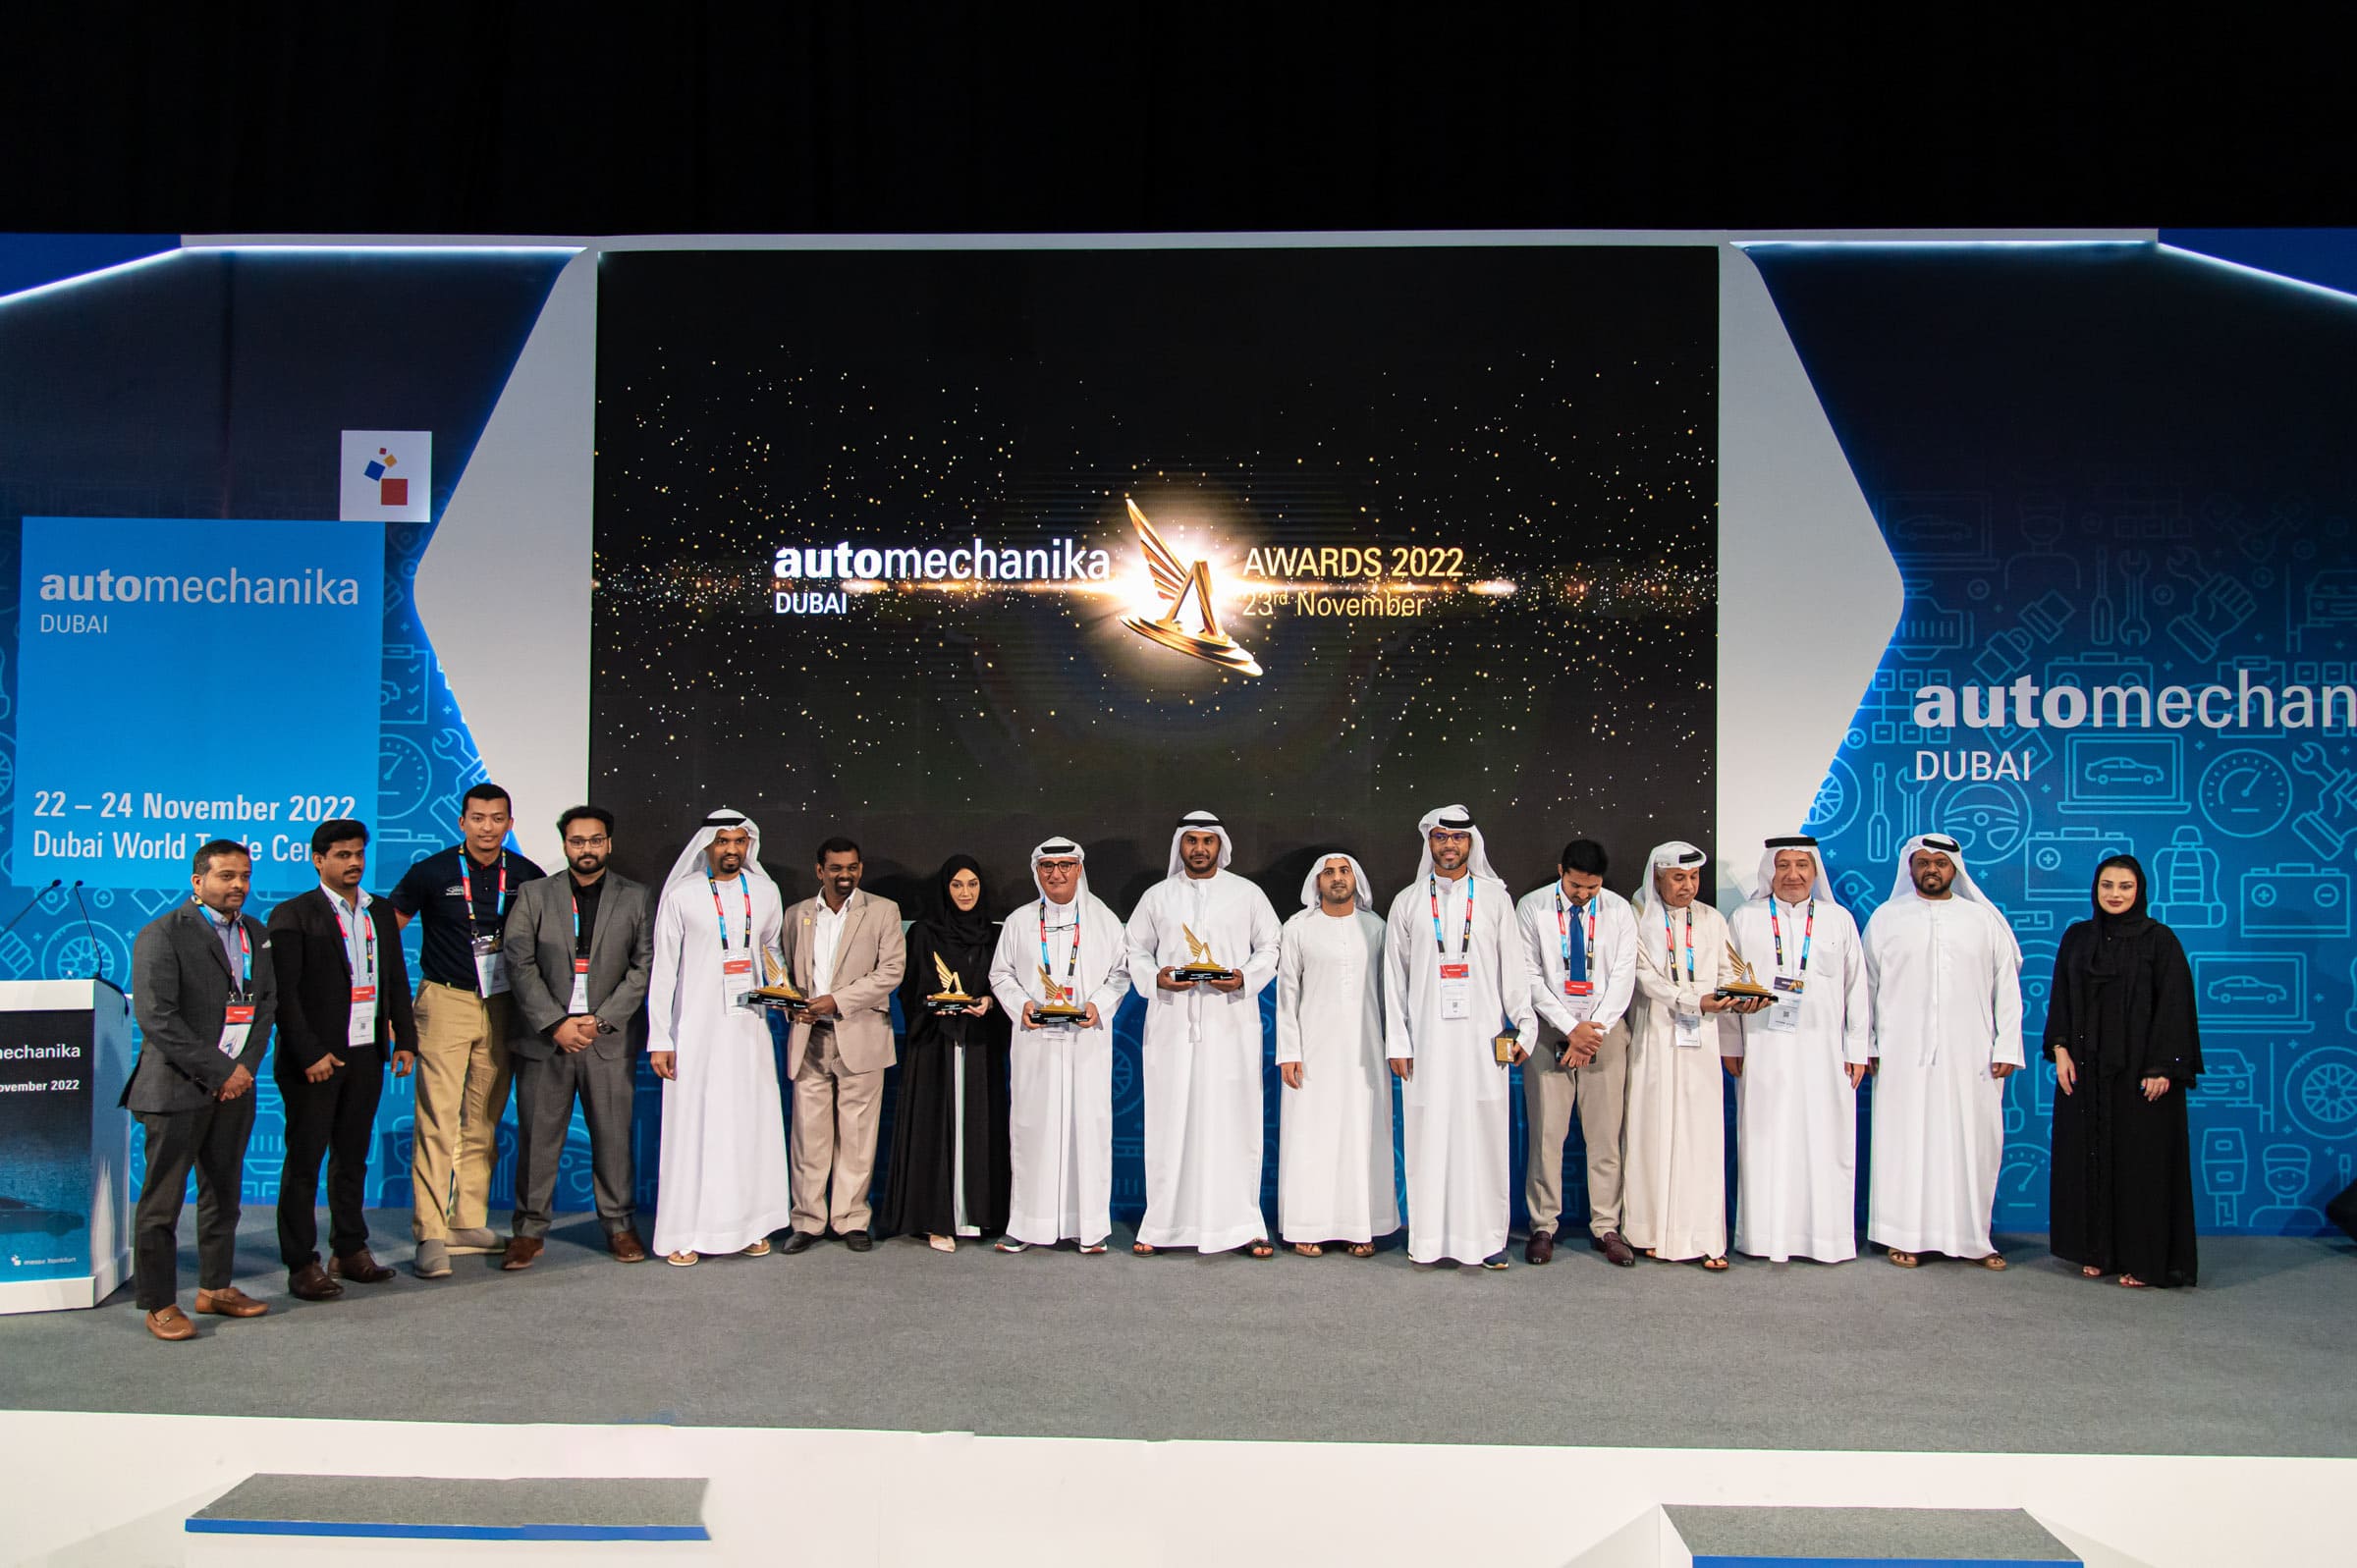 Automechanika Dubai - Awards 2022 Winners